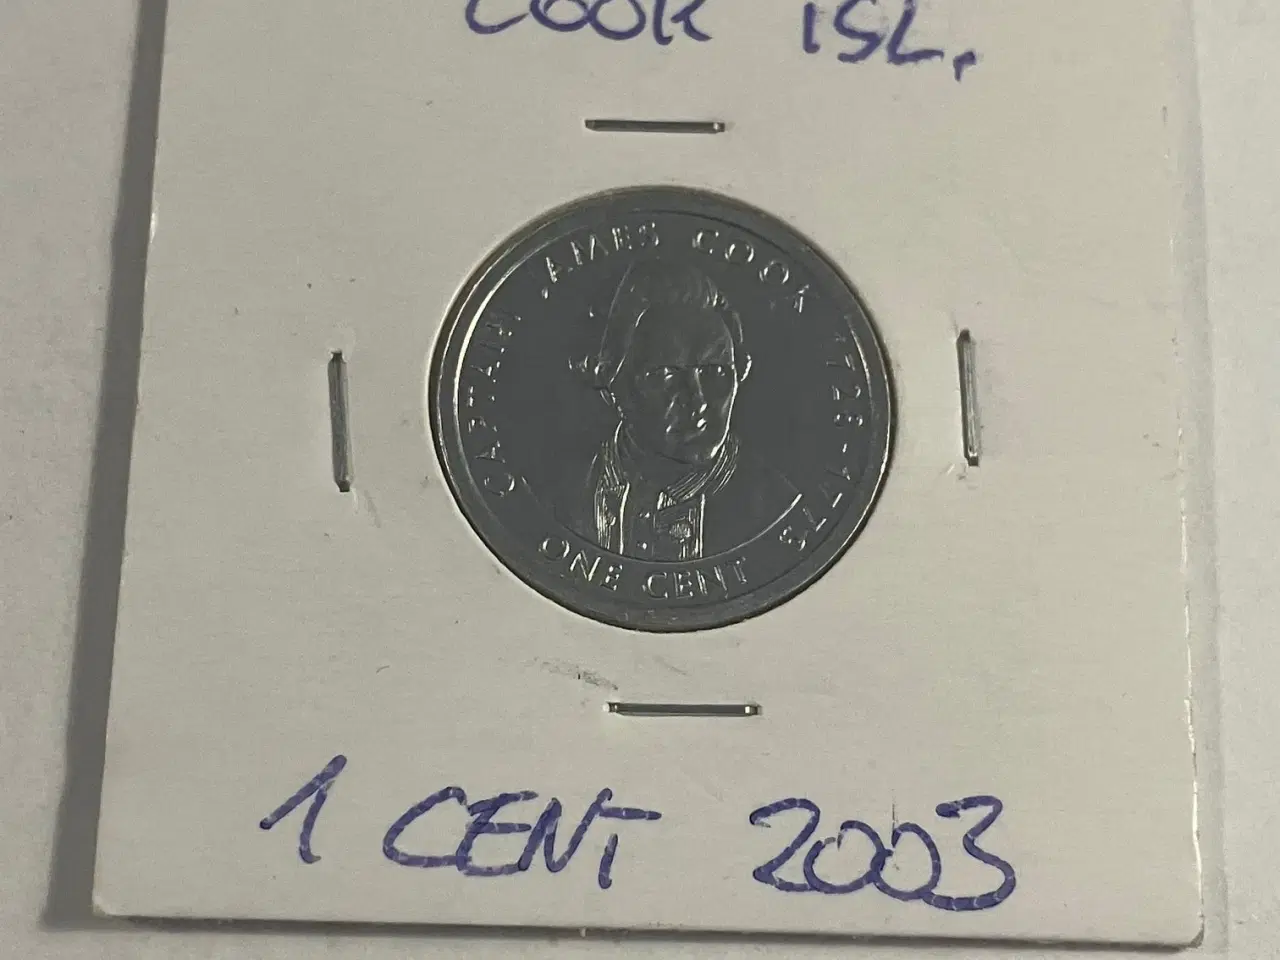 Billede 1 - 1 cent Cook Islands 2003